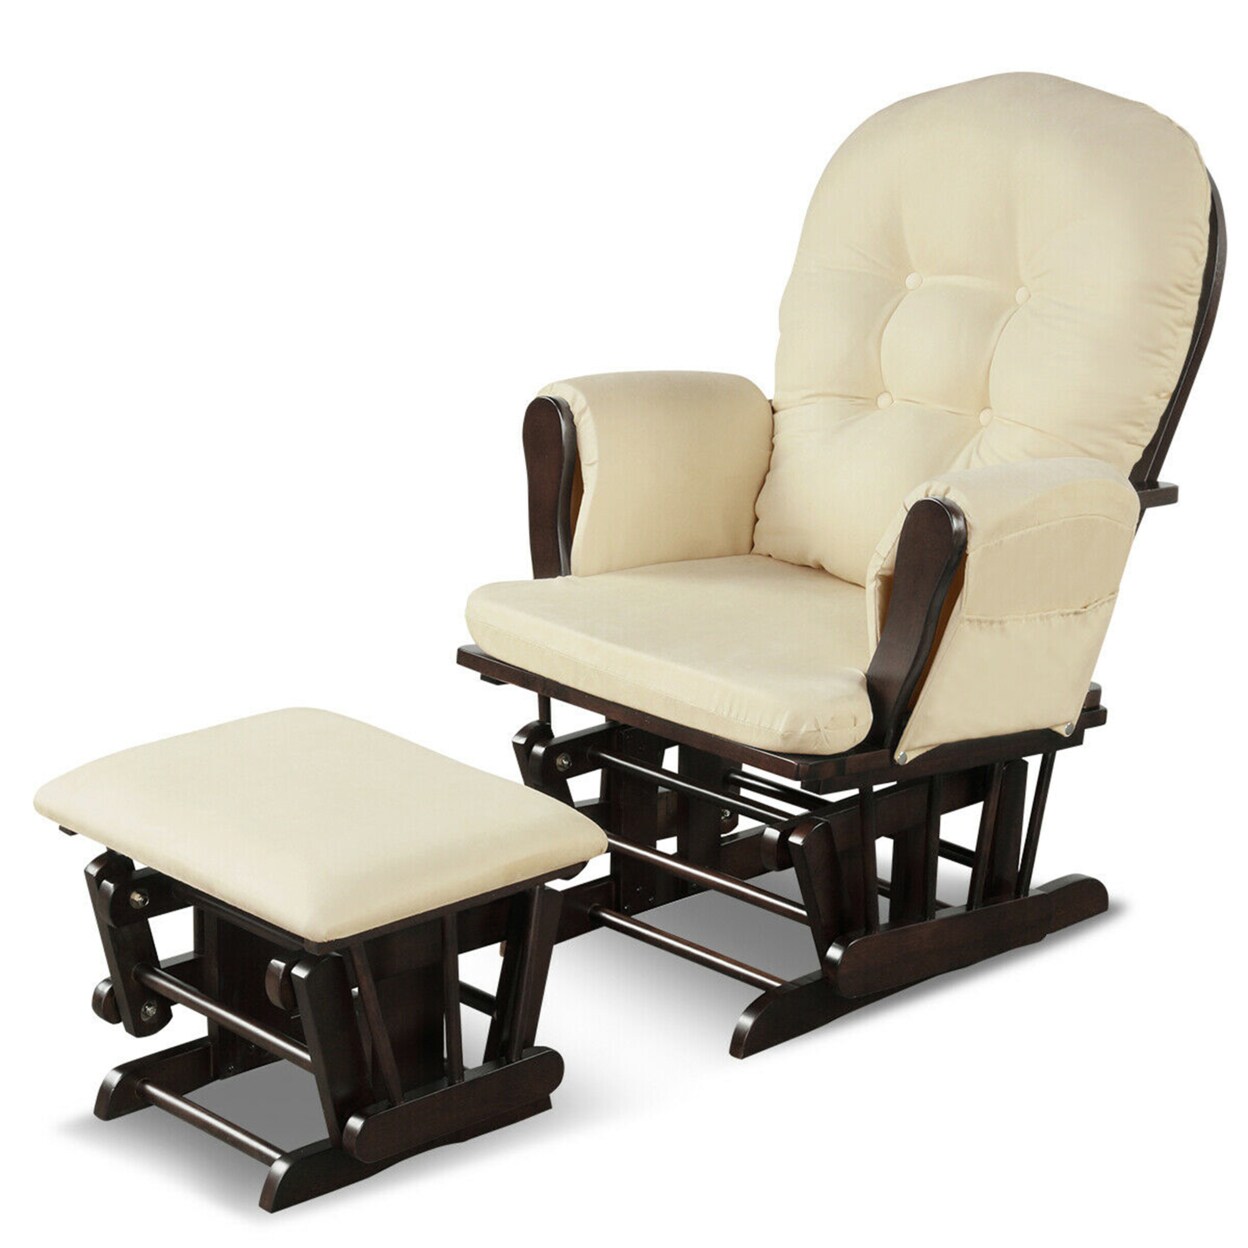 Gymax Glider and Ottoman Cushion Set Wood Baby Nursery Rocking Chair